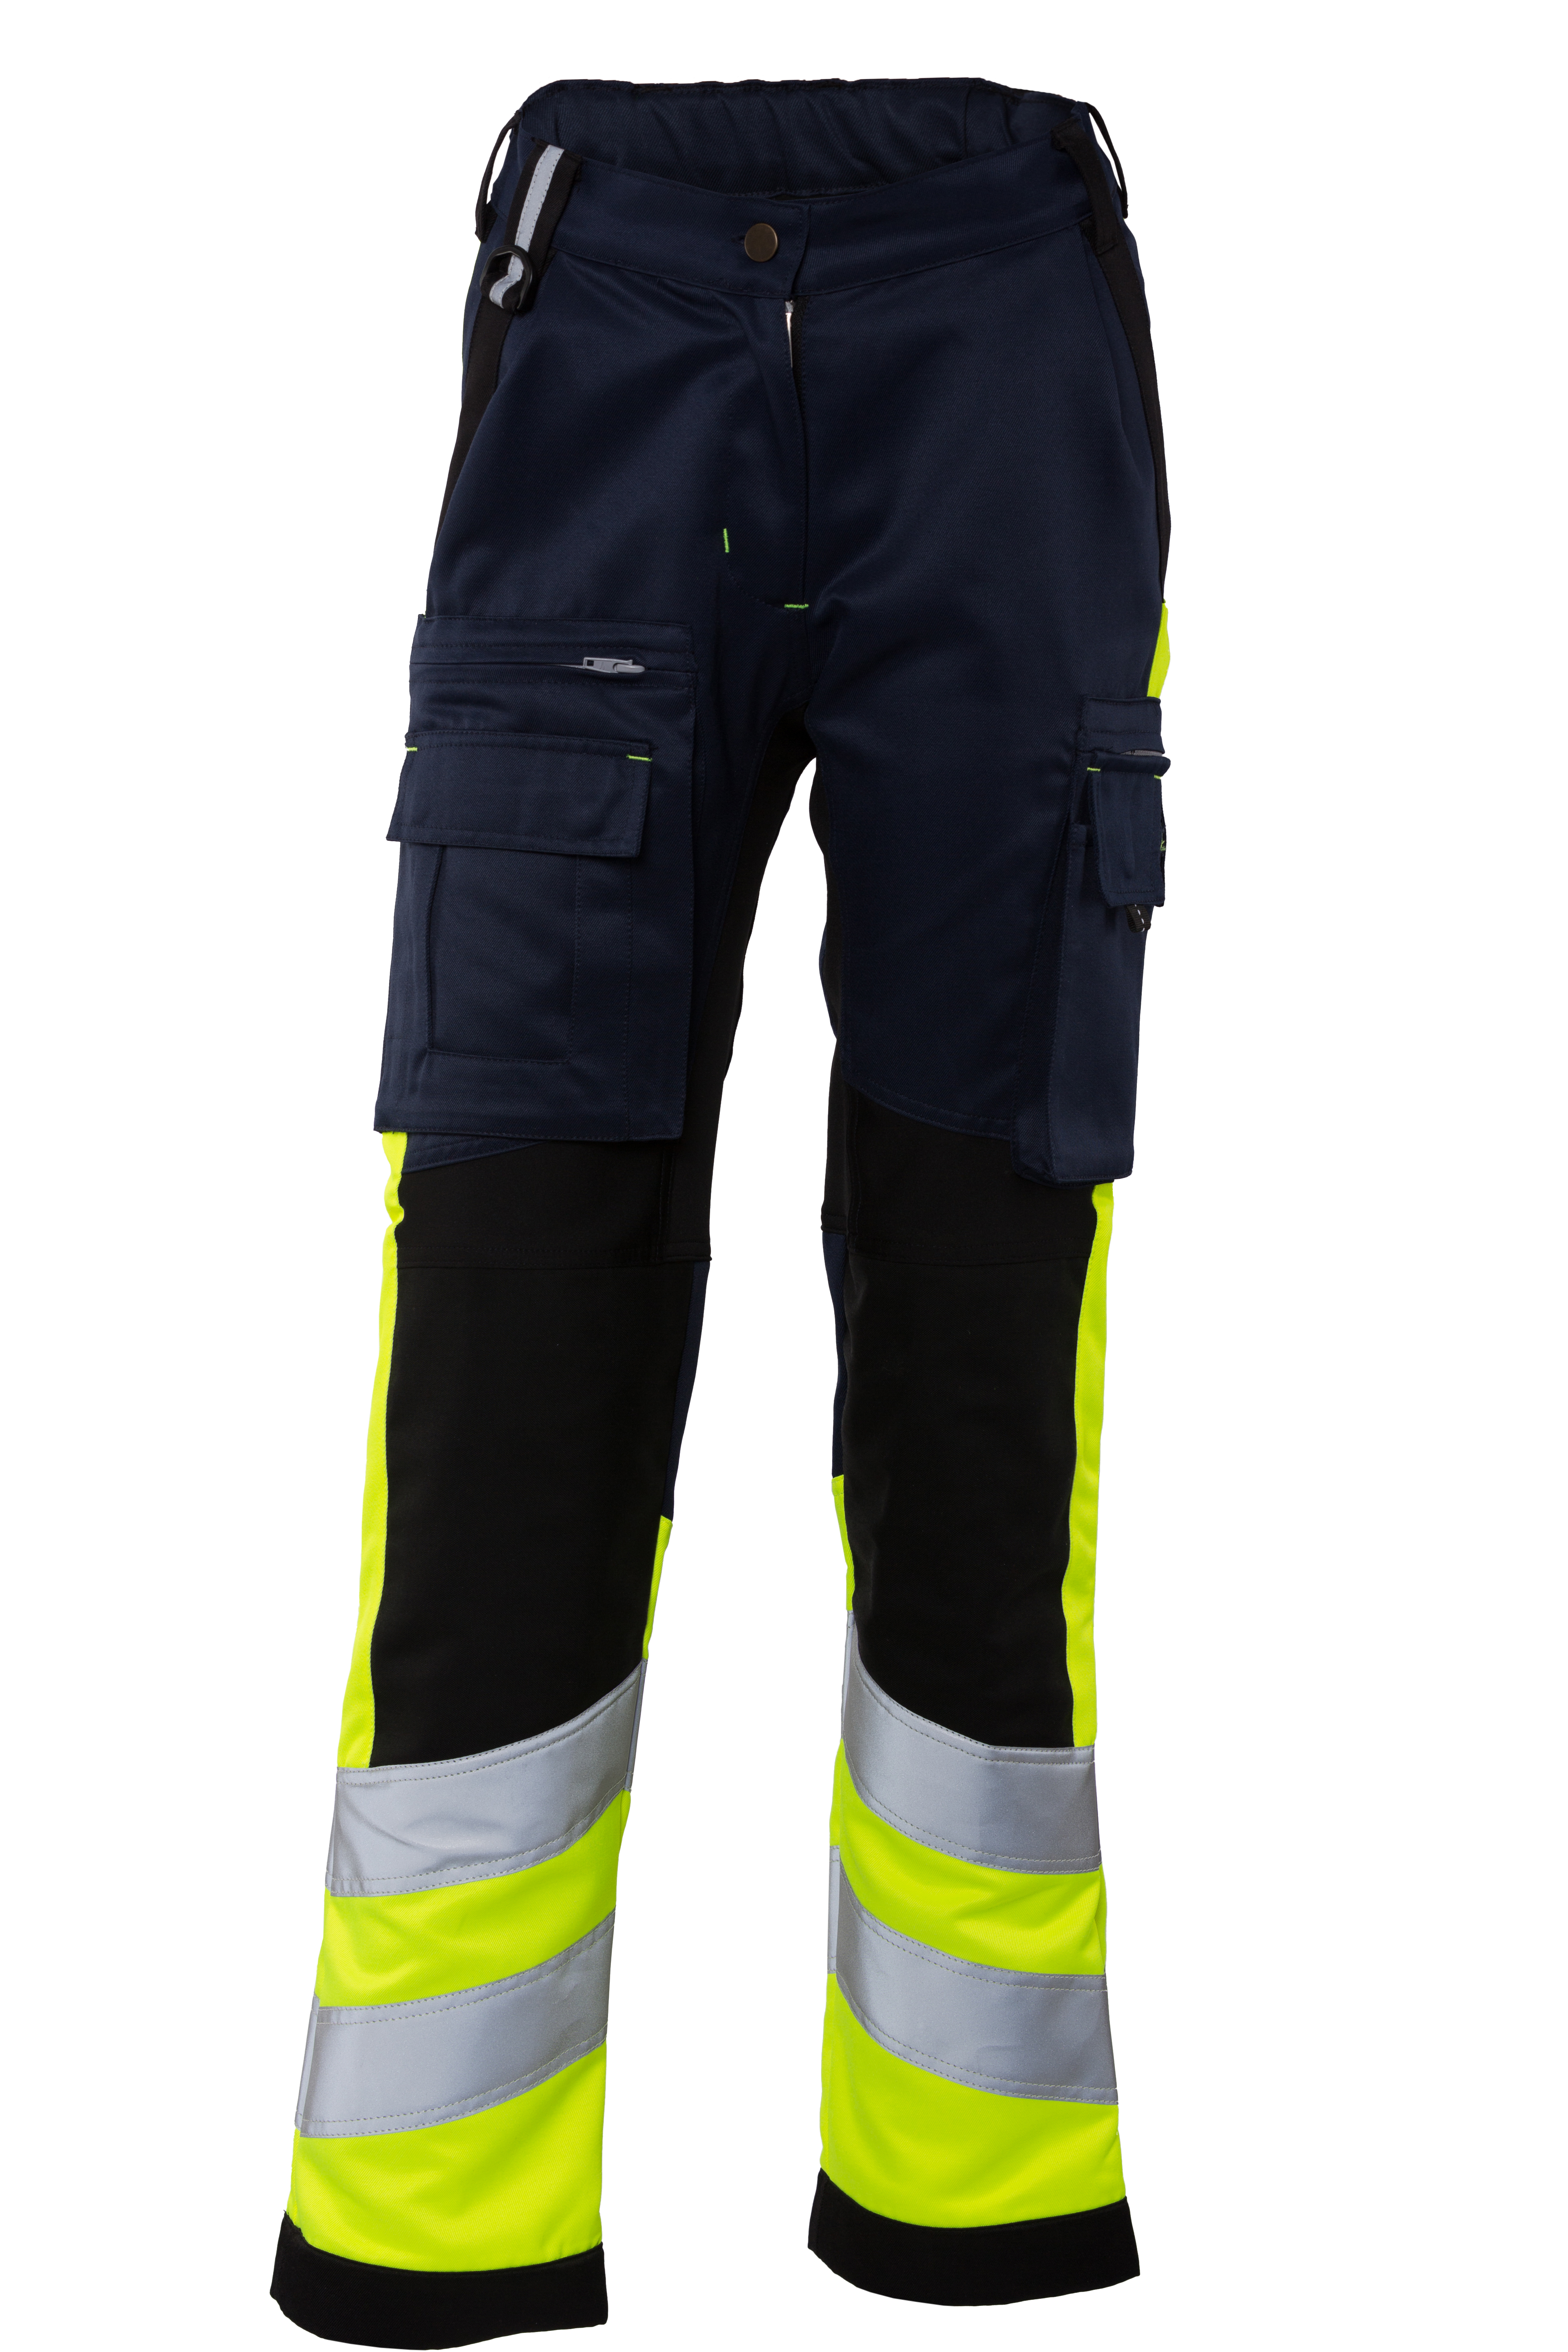 Rescuewear Damen Hose Stretch HiVis Klasse 1 Marineblau / Schwarz / Neon Gelb  - 36